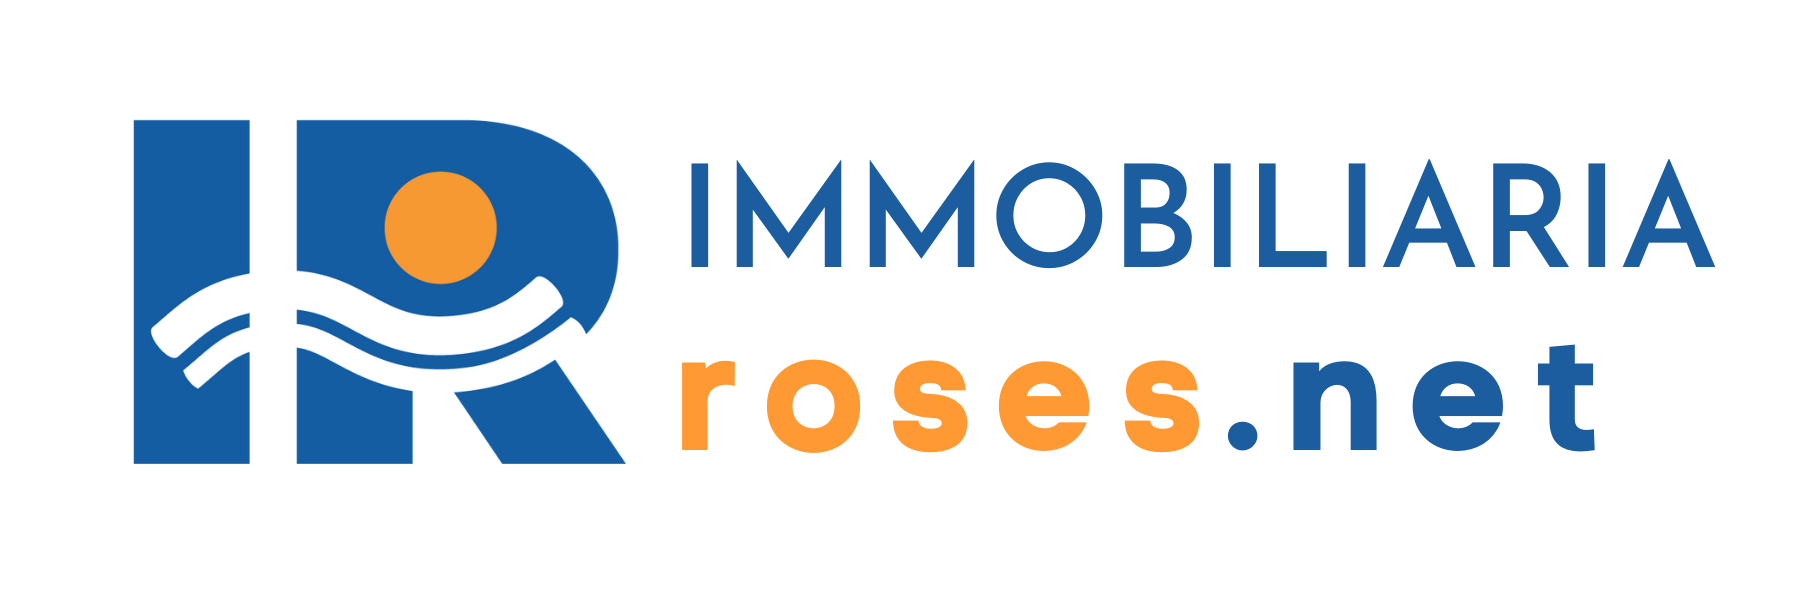 Inmobiliaria Immo Roses.net - Asesoramiento Inmobiliario Costa Brava